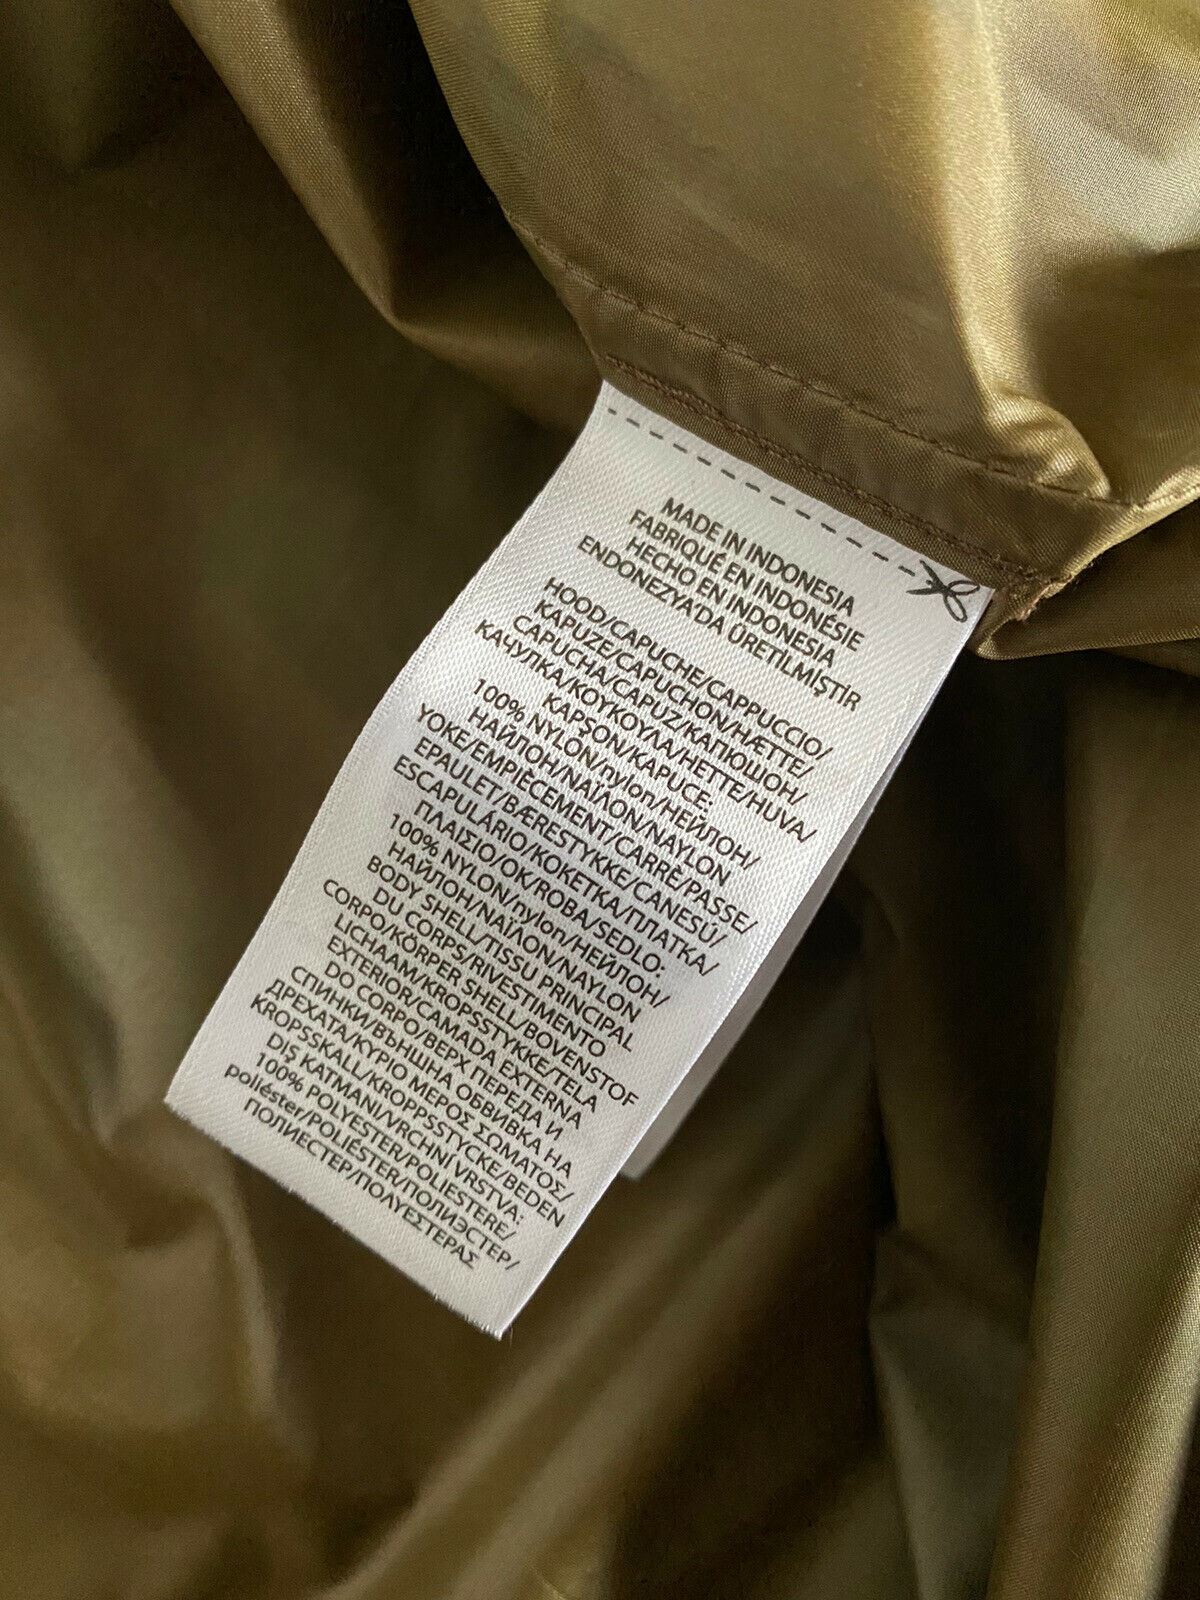 NWT 208 $ Polo Ralph Lauren Nylon-Camouflage-Kapuzenjacke für Herren 2XB